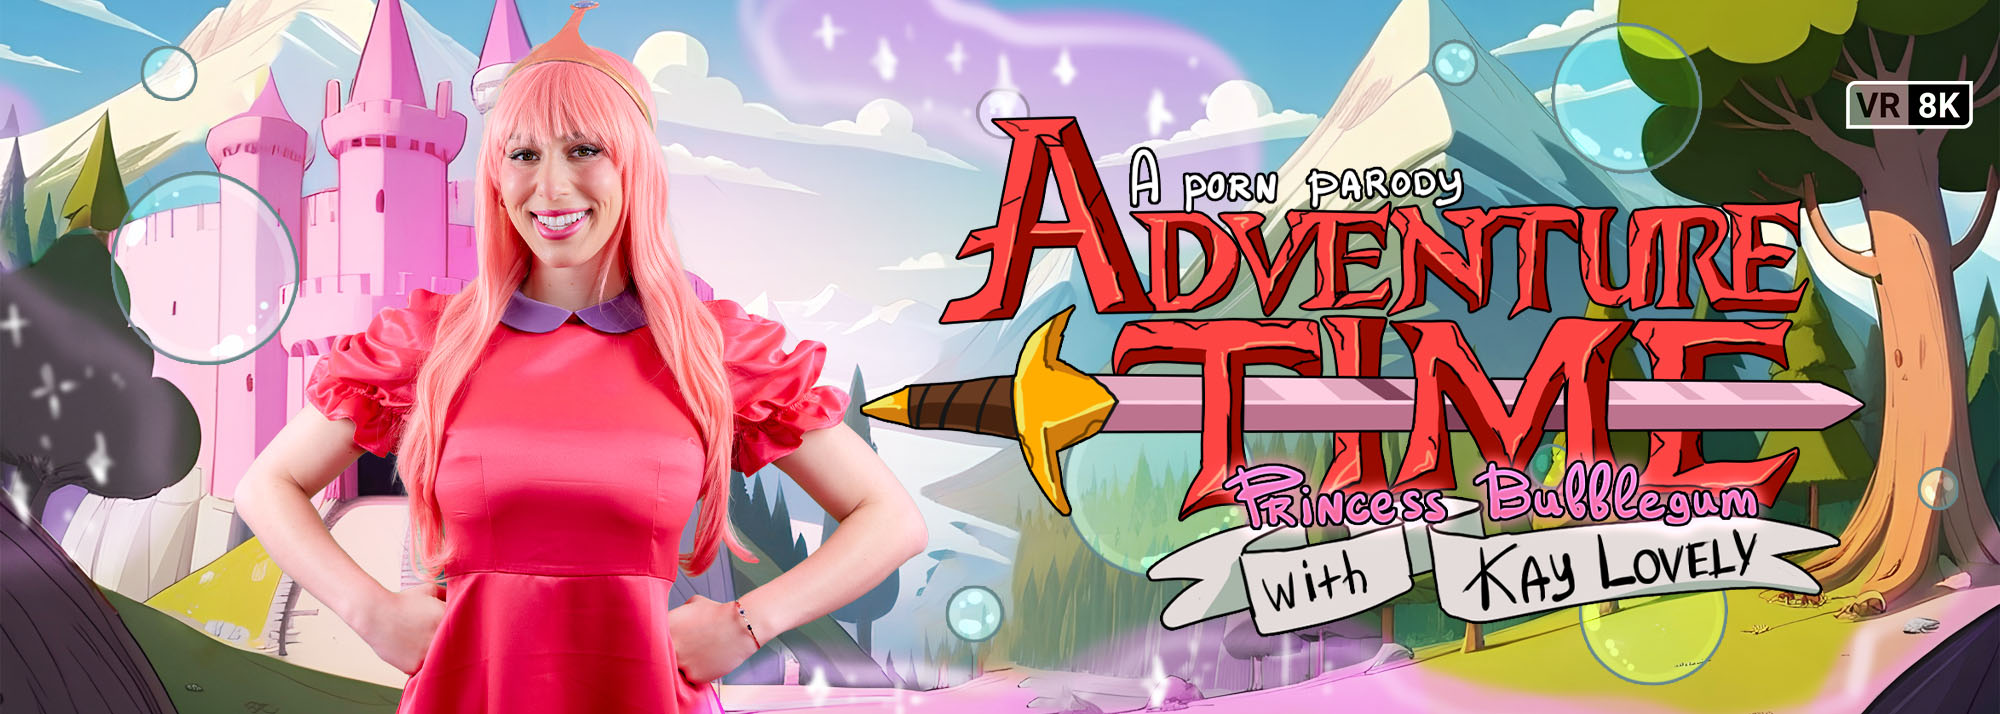 2000px x 714px - Adventure Time: Princess Bubblegum (A Porn Parody) - Cosplay VR Porn Video  | VR Conk